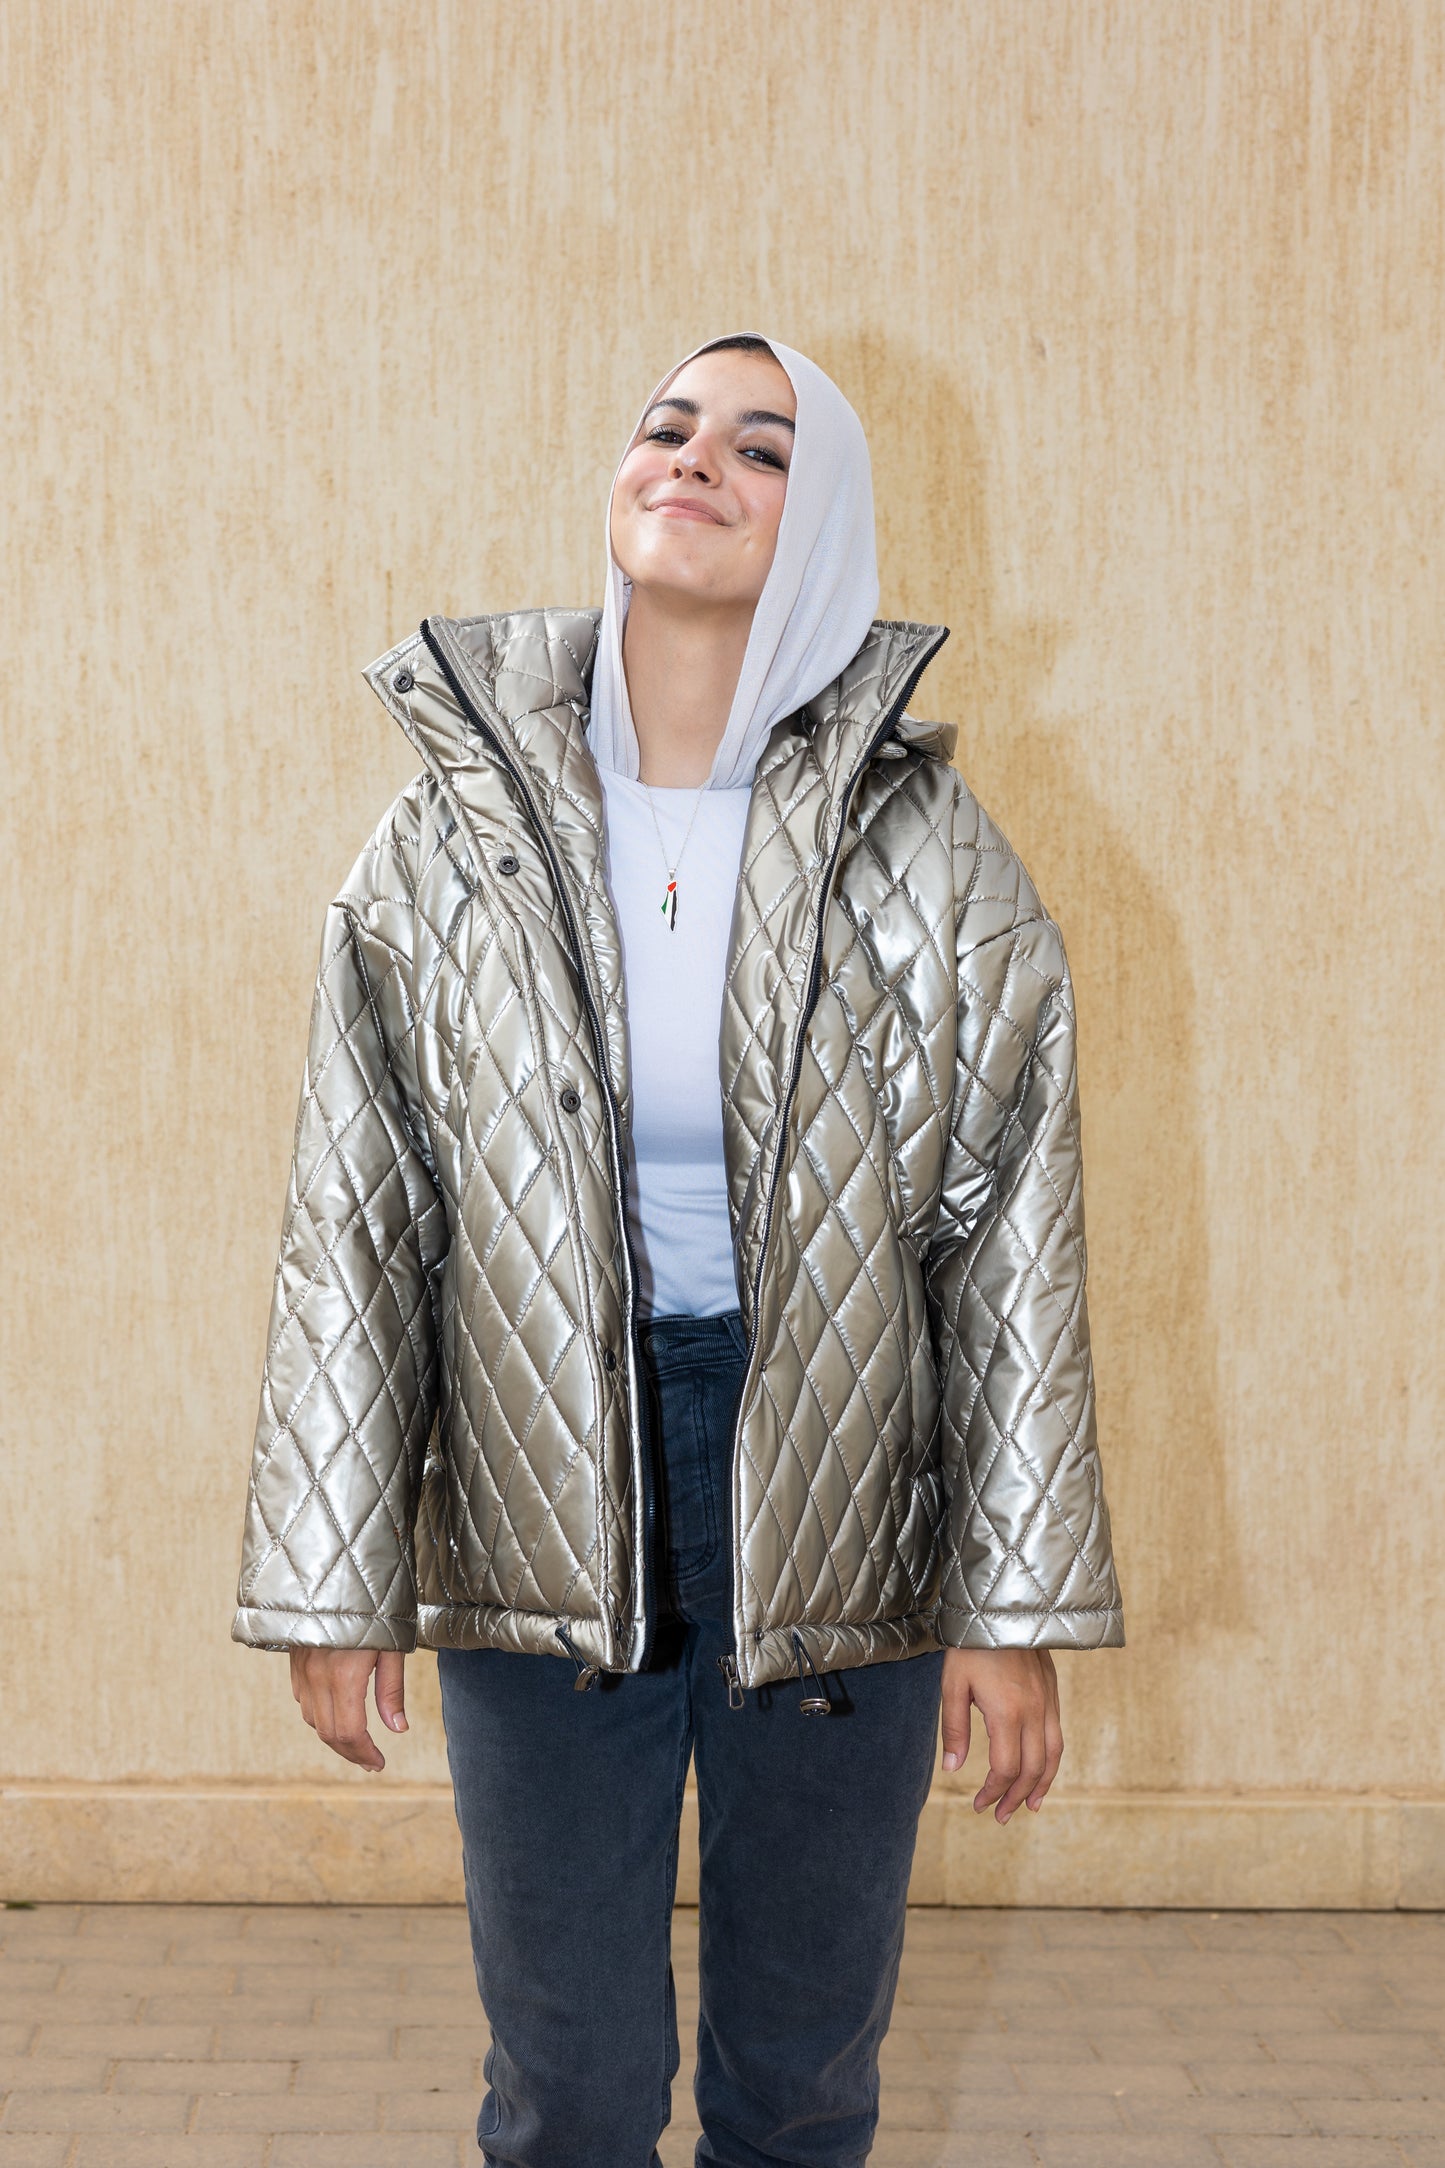 The metallic puffer jacket